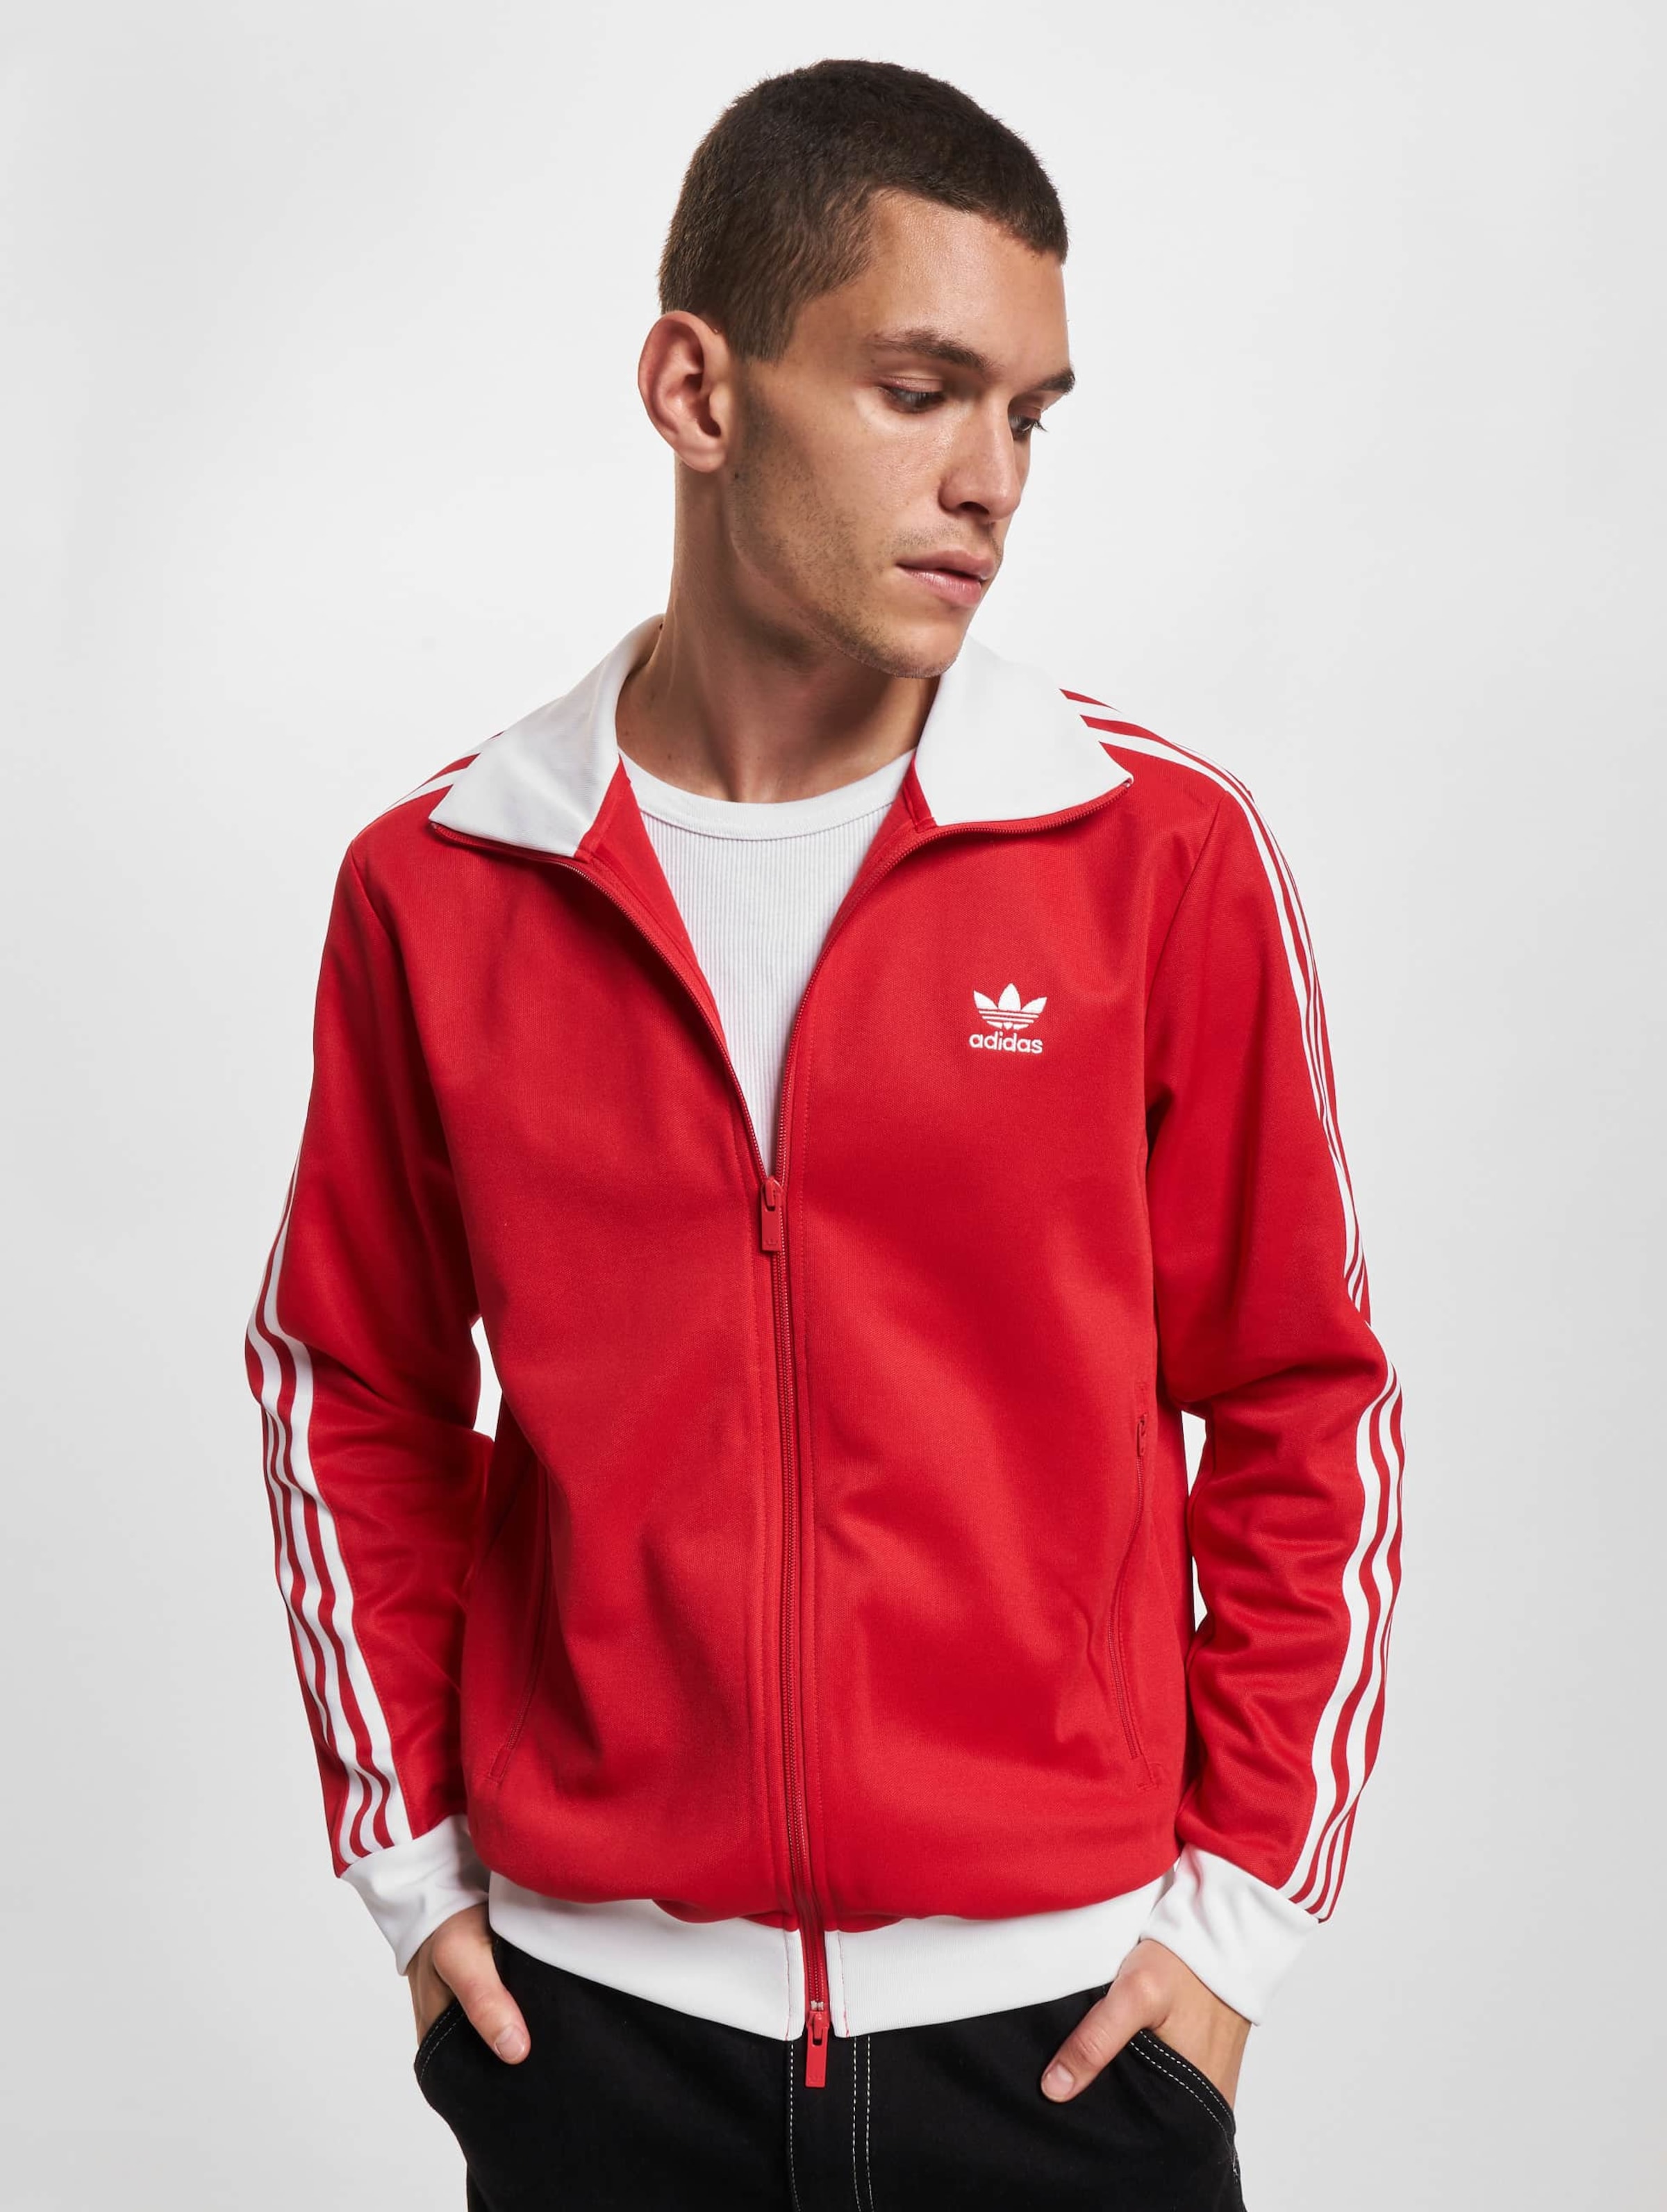 adidas Originals Beckenbauer Übergangsjacke Mannen,Unisex op kleur rood, Maat S